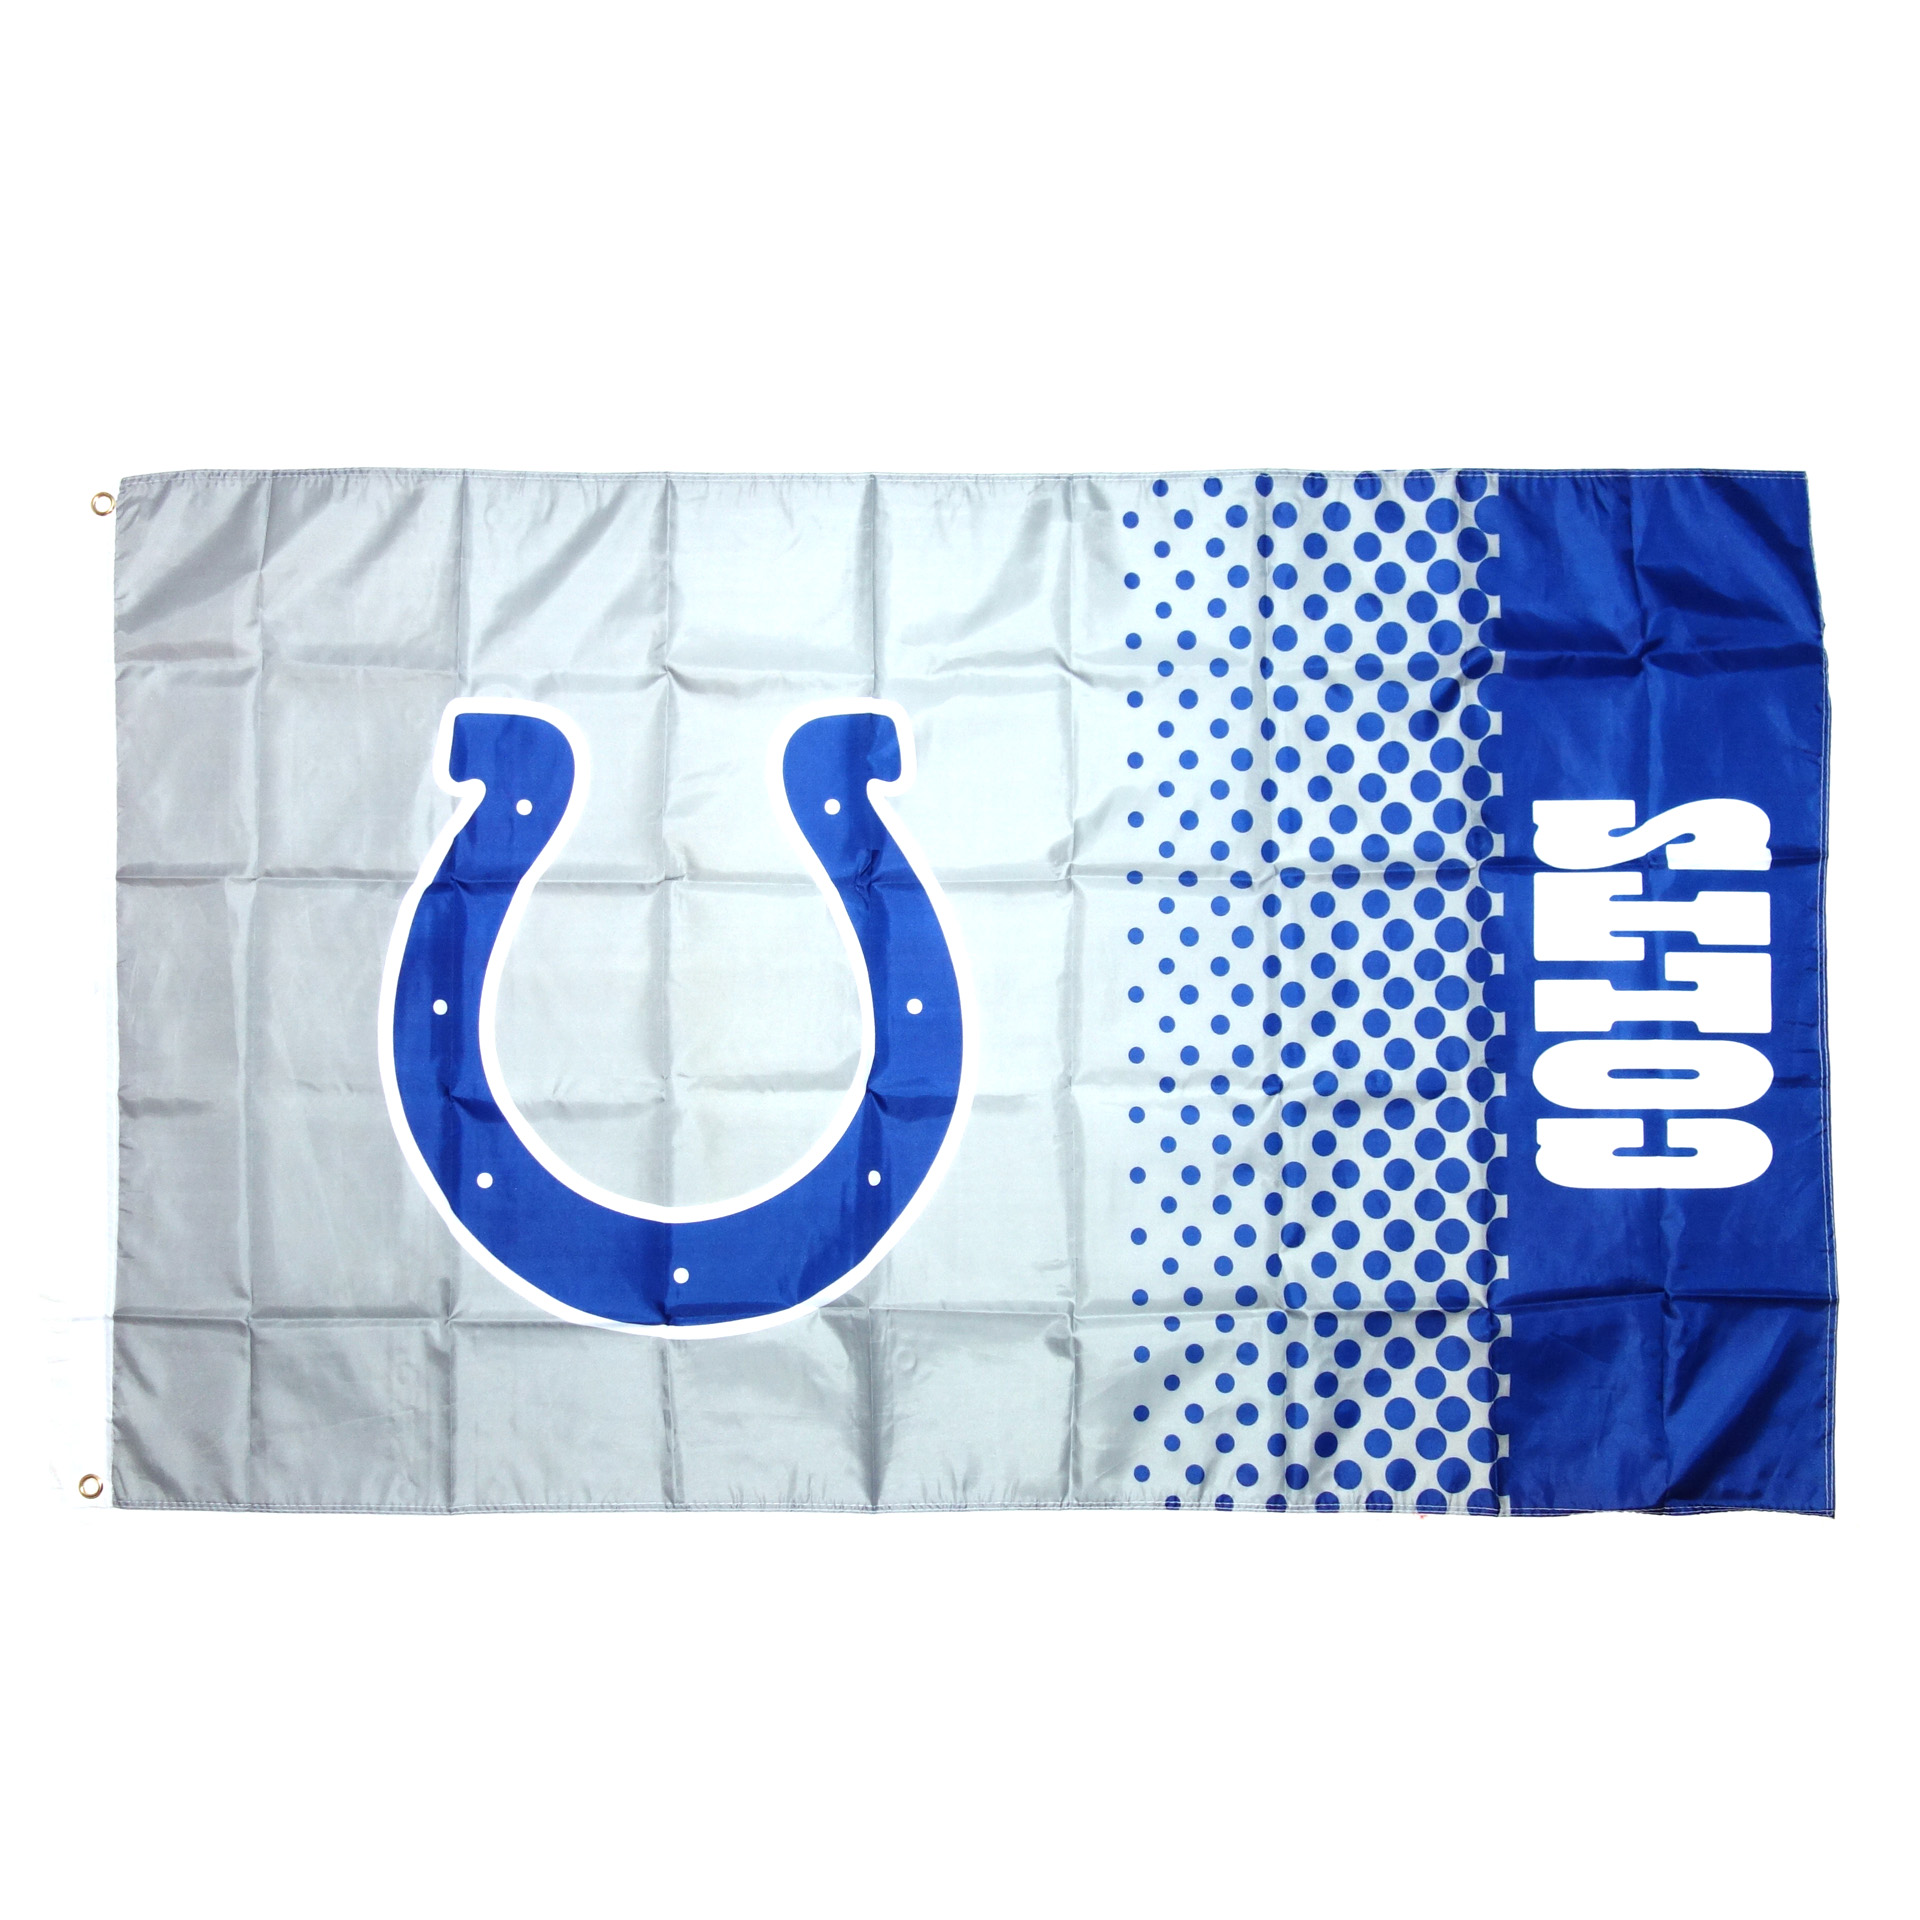 NFL Fahne Indianapolis Colts Flagge Fade Flag